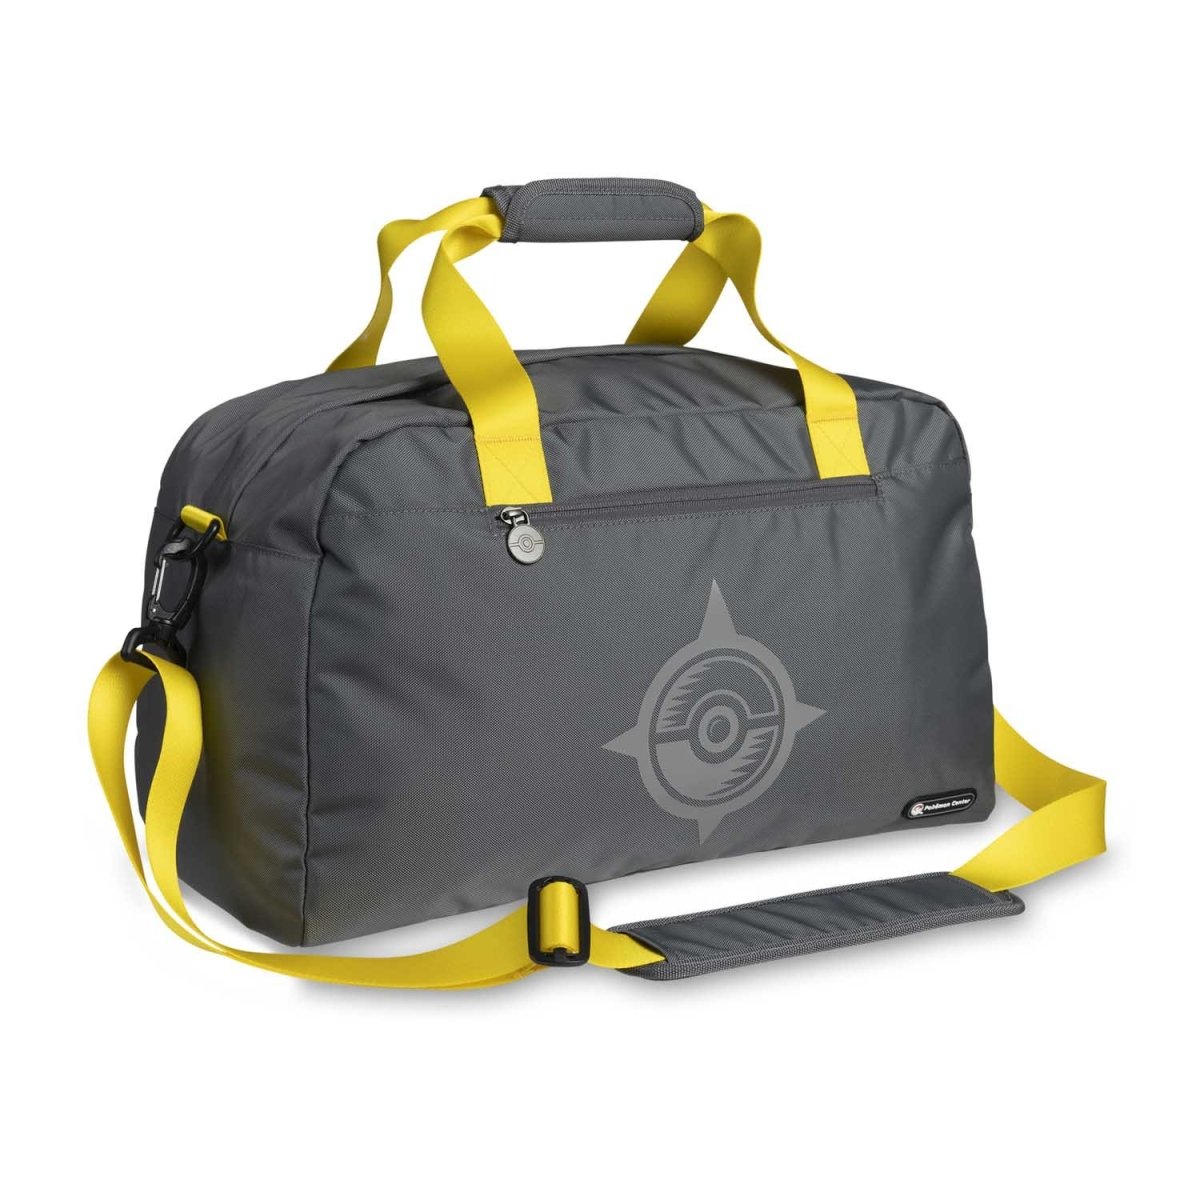 Pokémon Everyday Bags: Gray & Yellow Small Duffel Bag